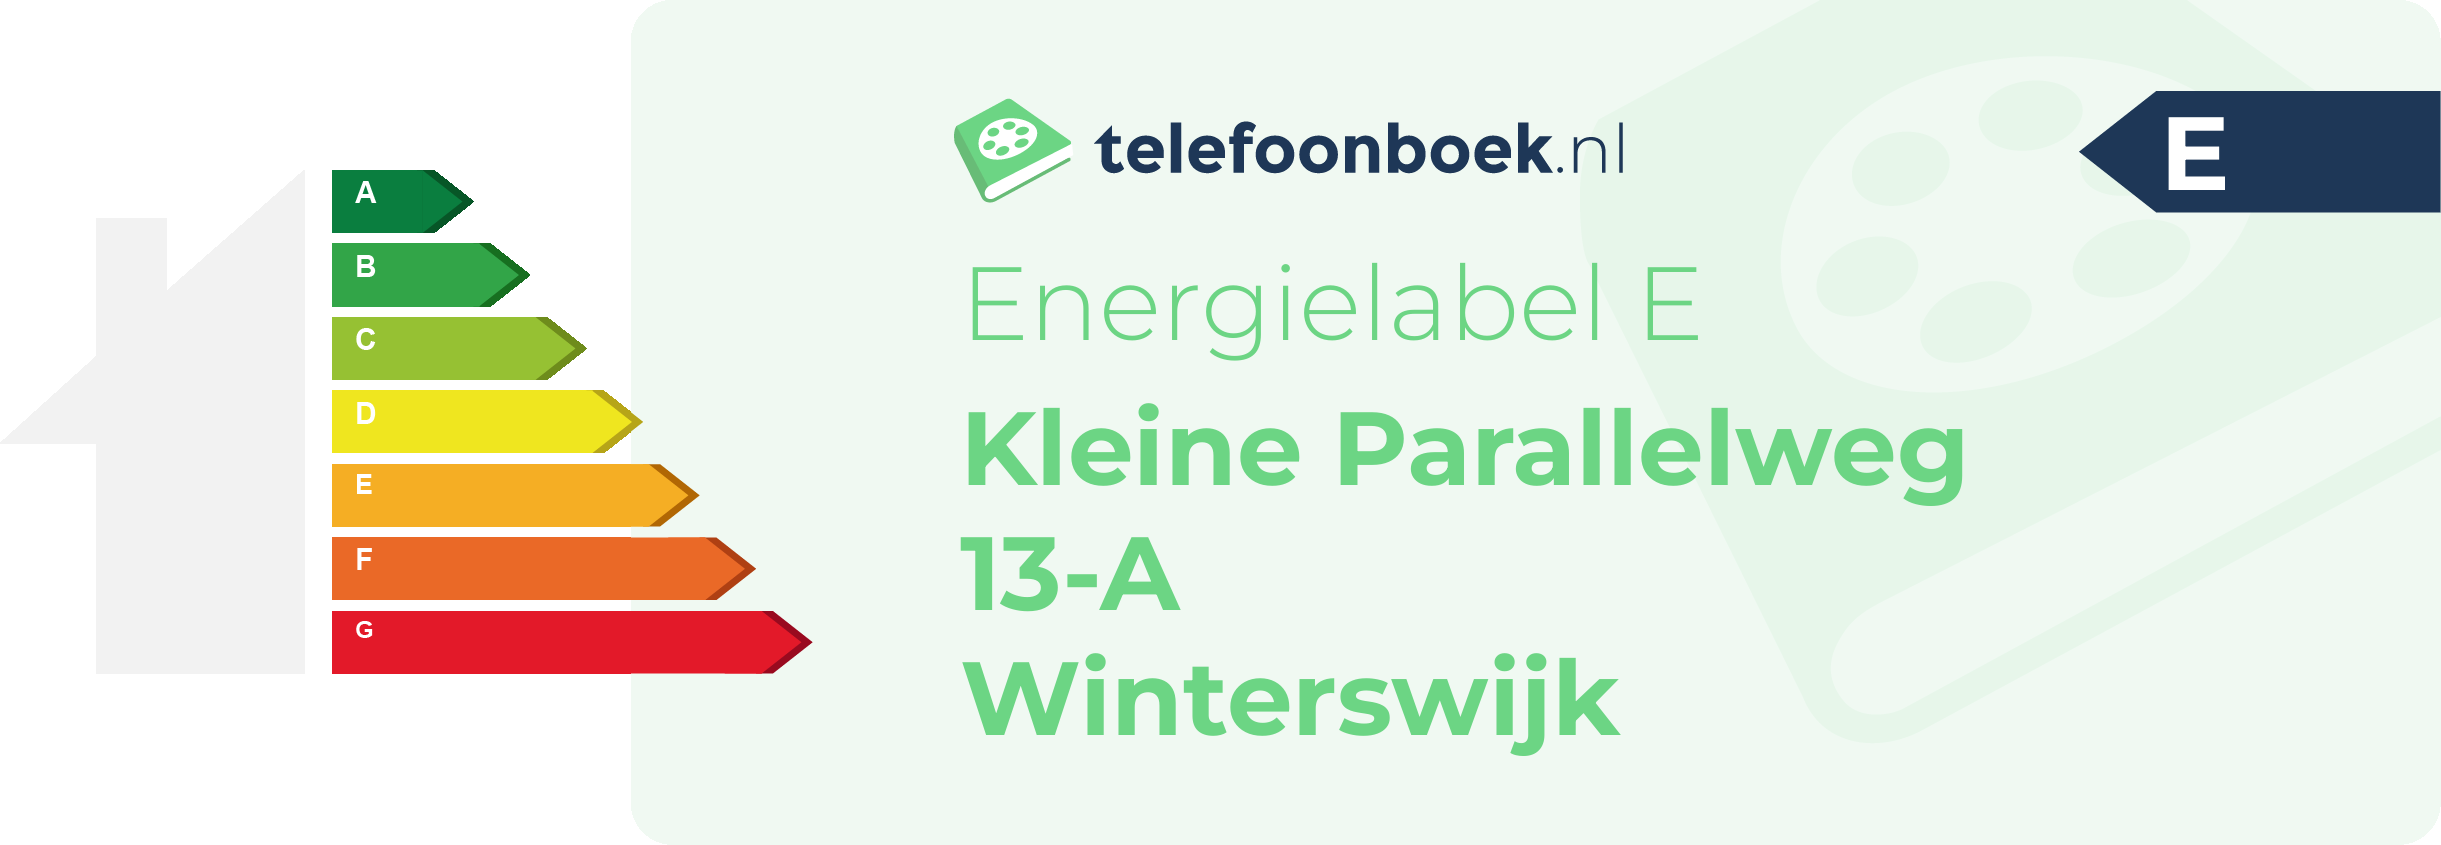 Energielabel Kleine Parallelweg 13-A Winterswijk